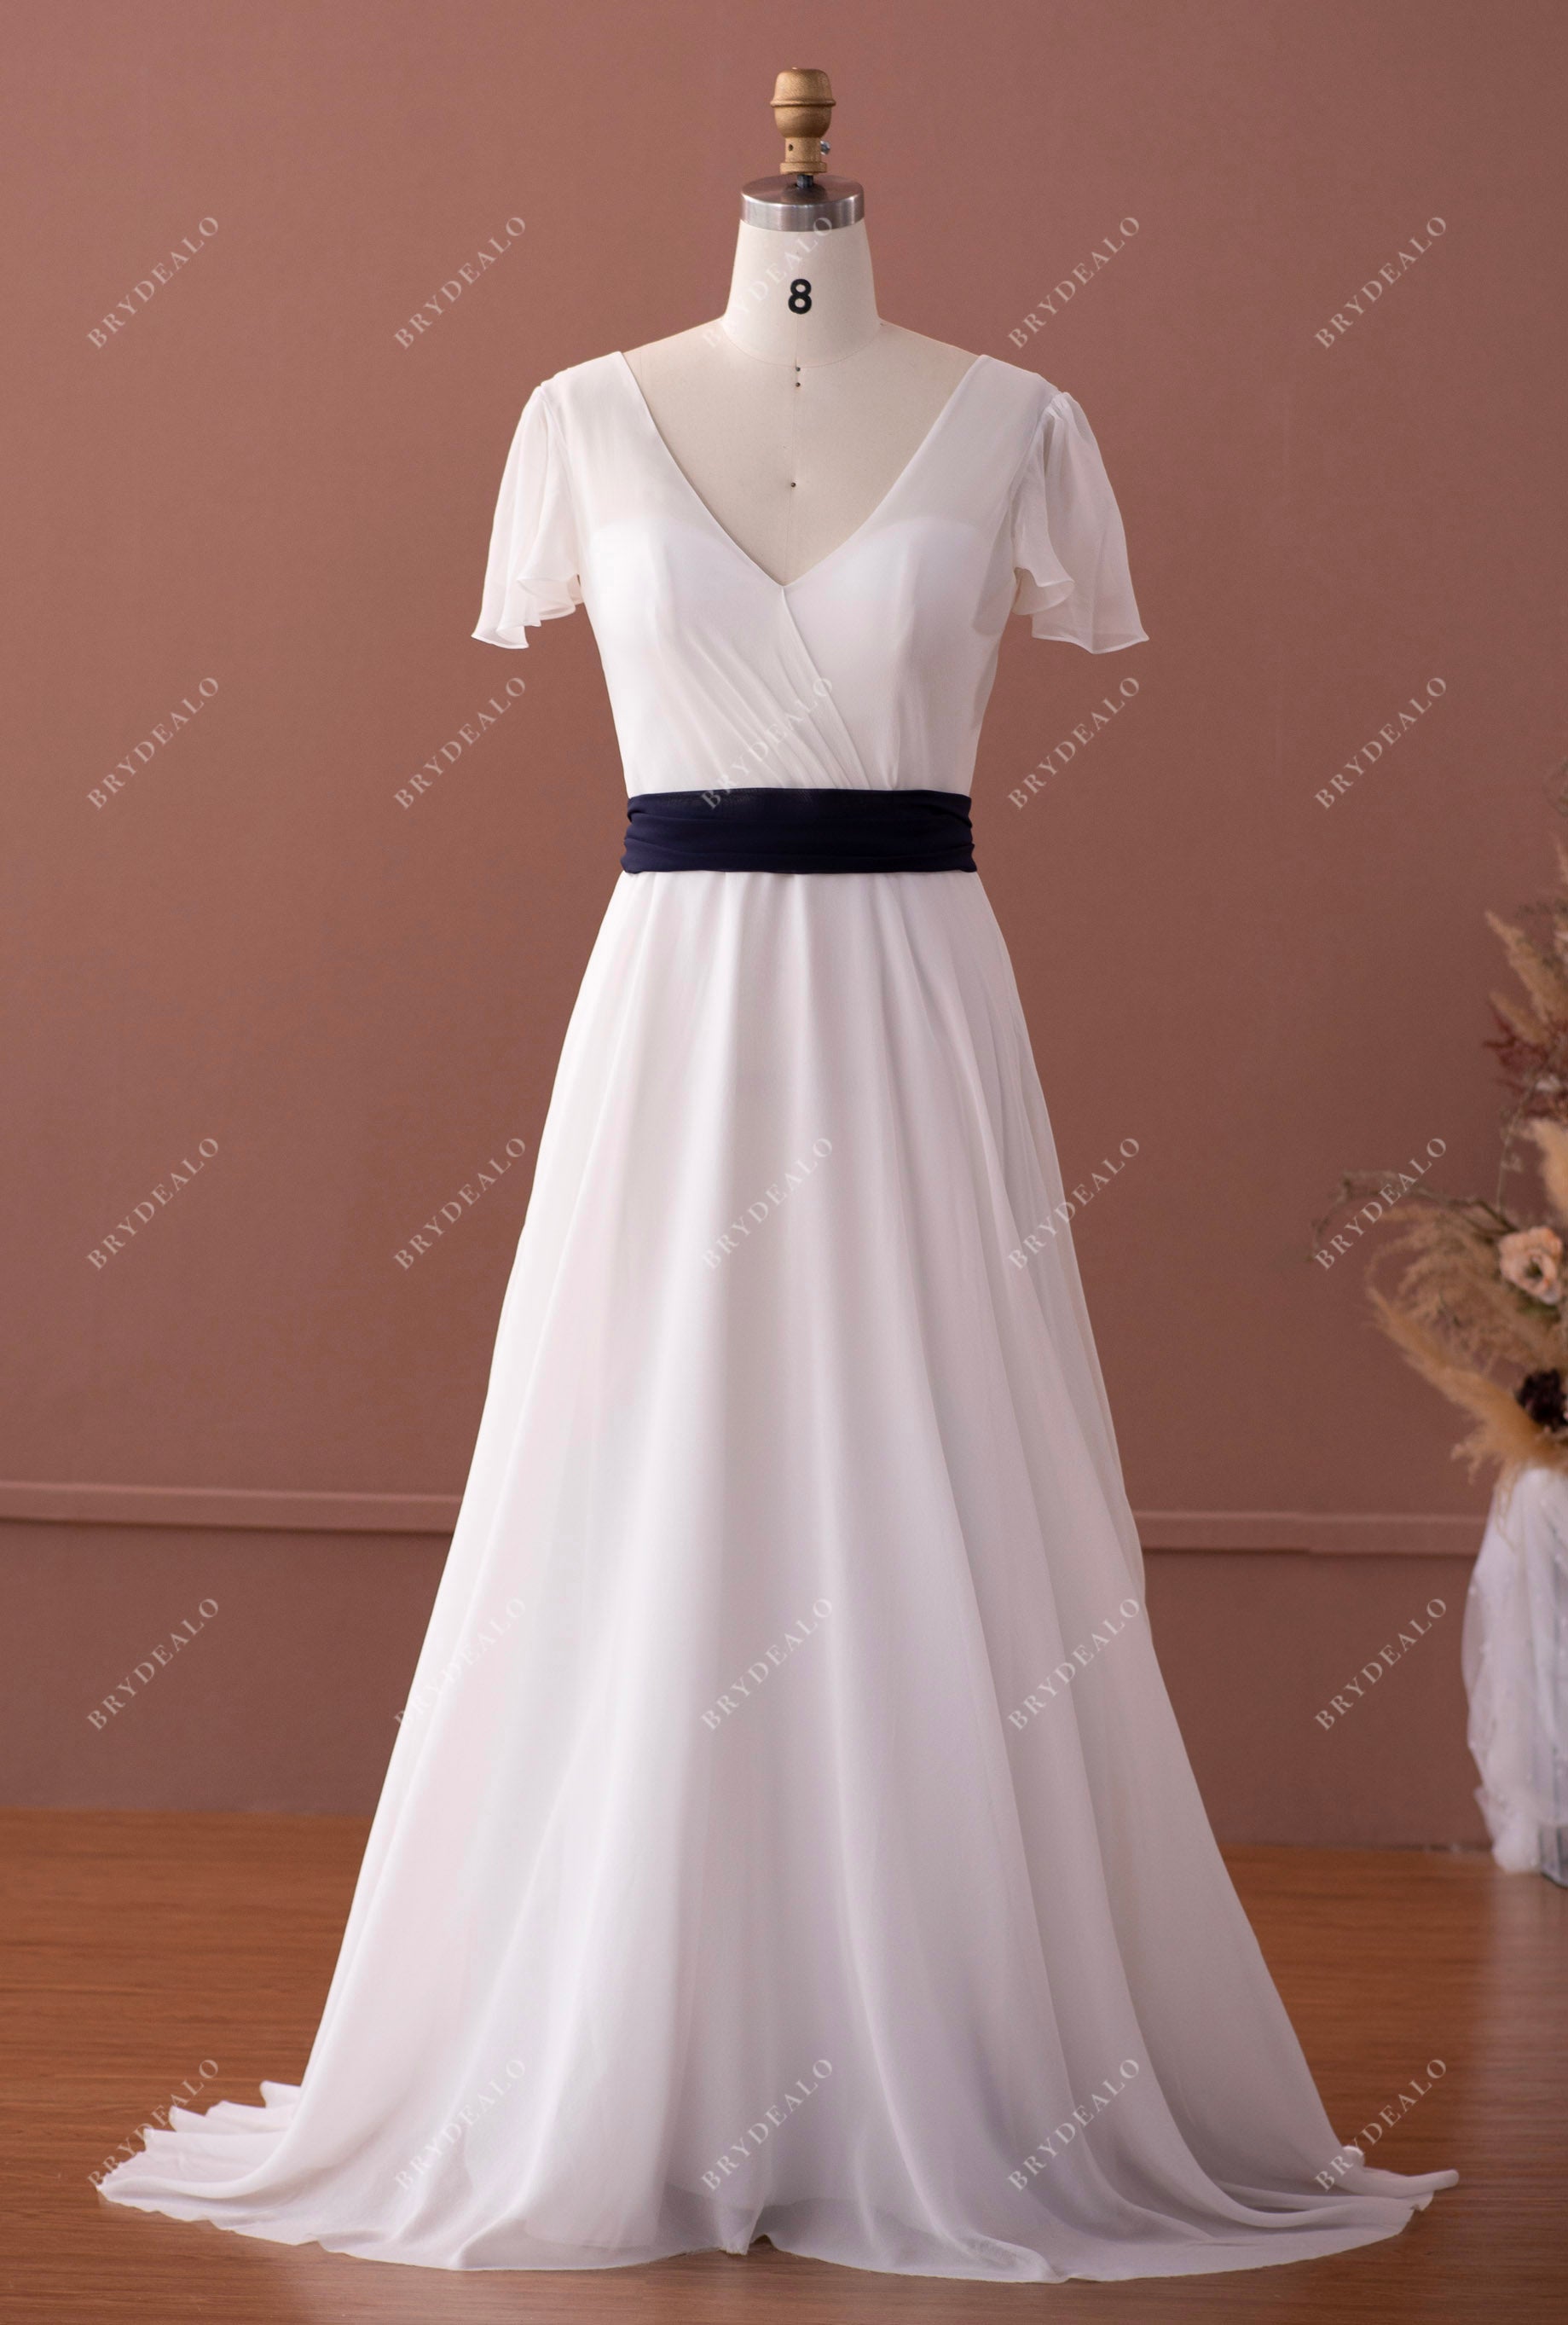 silk georgette flitter sleeve A-line wedding dress with navy sash